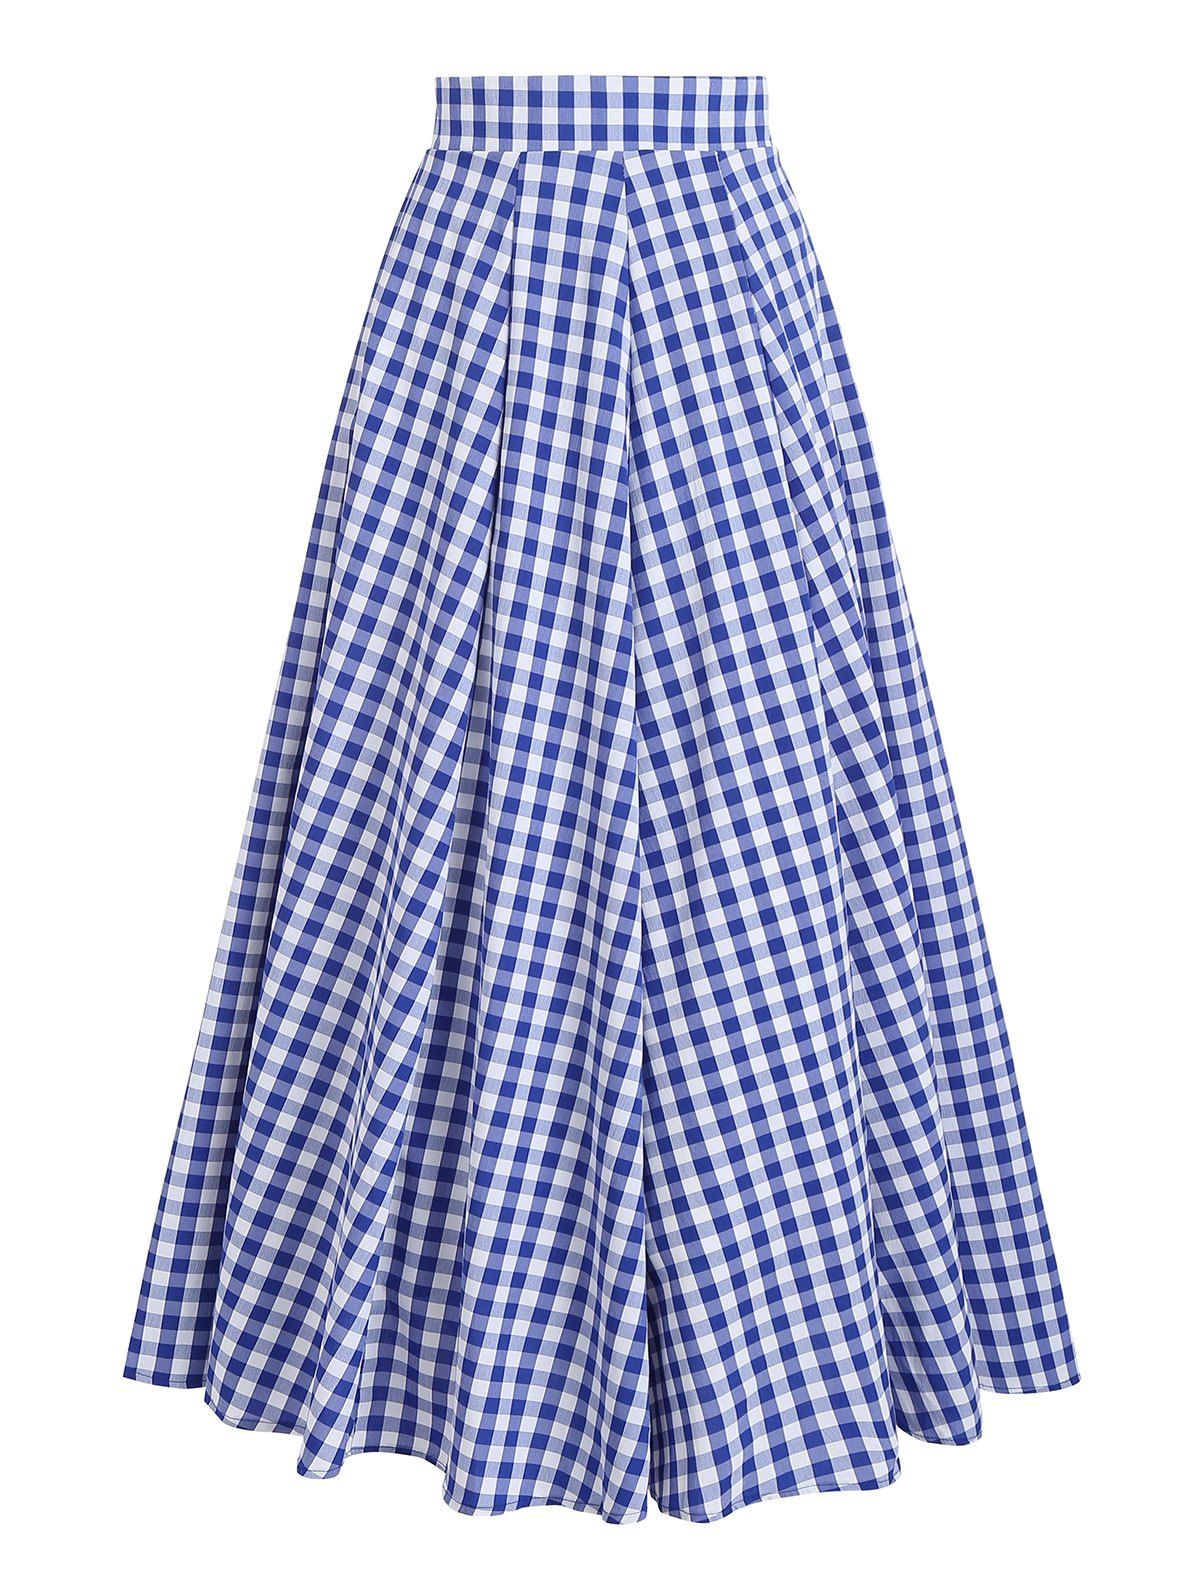 Gingham Print Maxi Skirt - BLUE XL